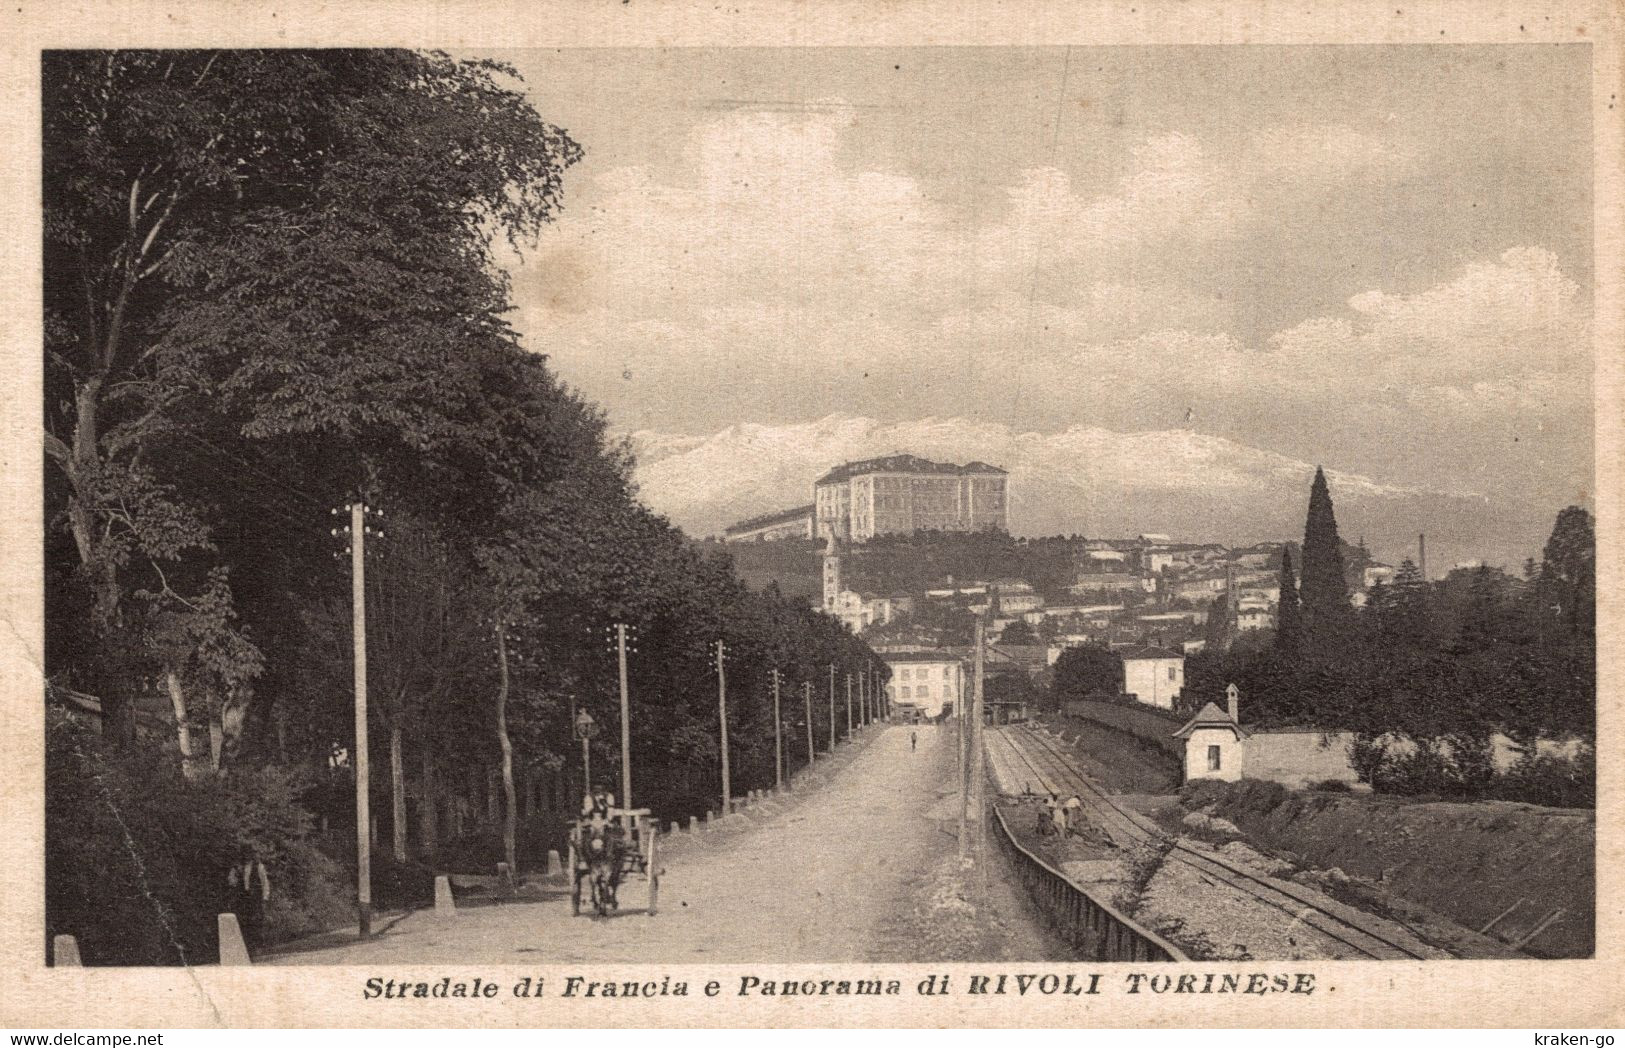 RIVOLI, Torino - Panorama - VG + Targhetta Postale - #060 - Rivoli